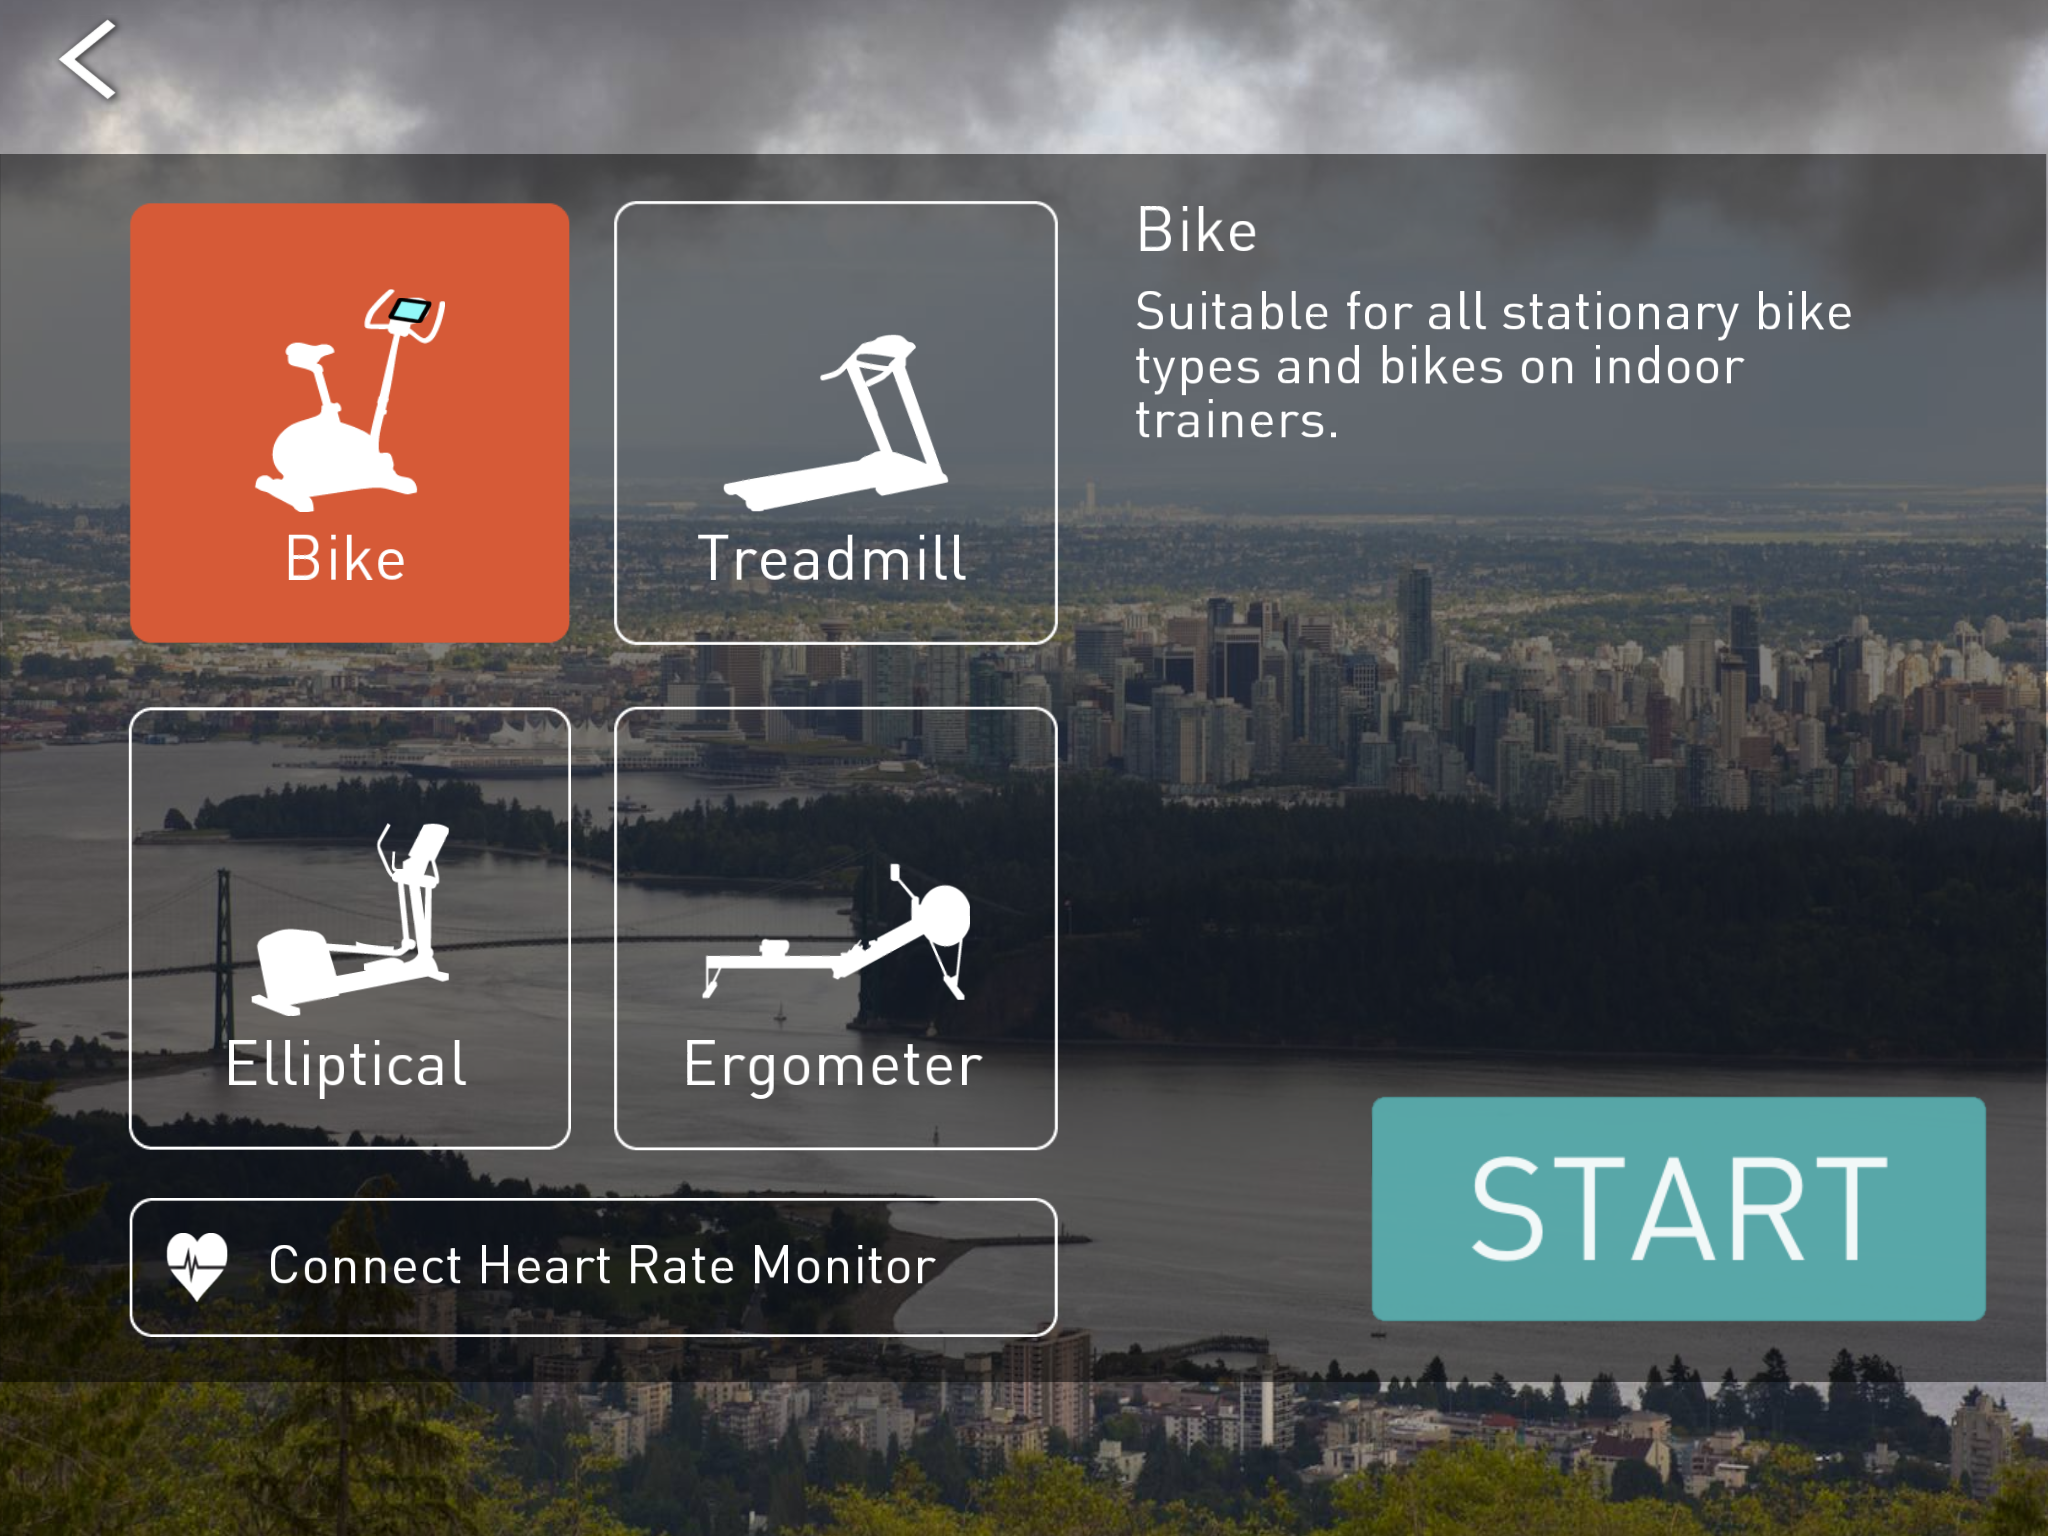 5 Day Stationary Bike Trainer App Android for Beginner